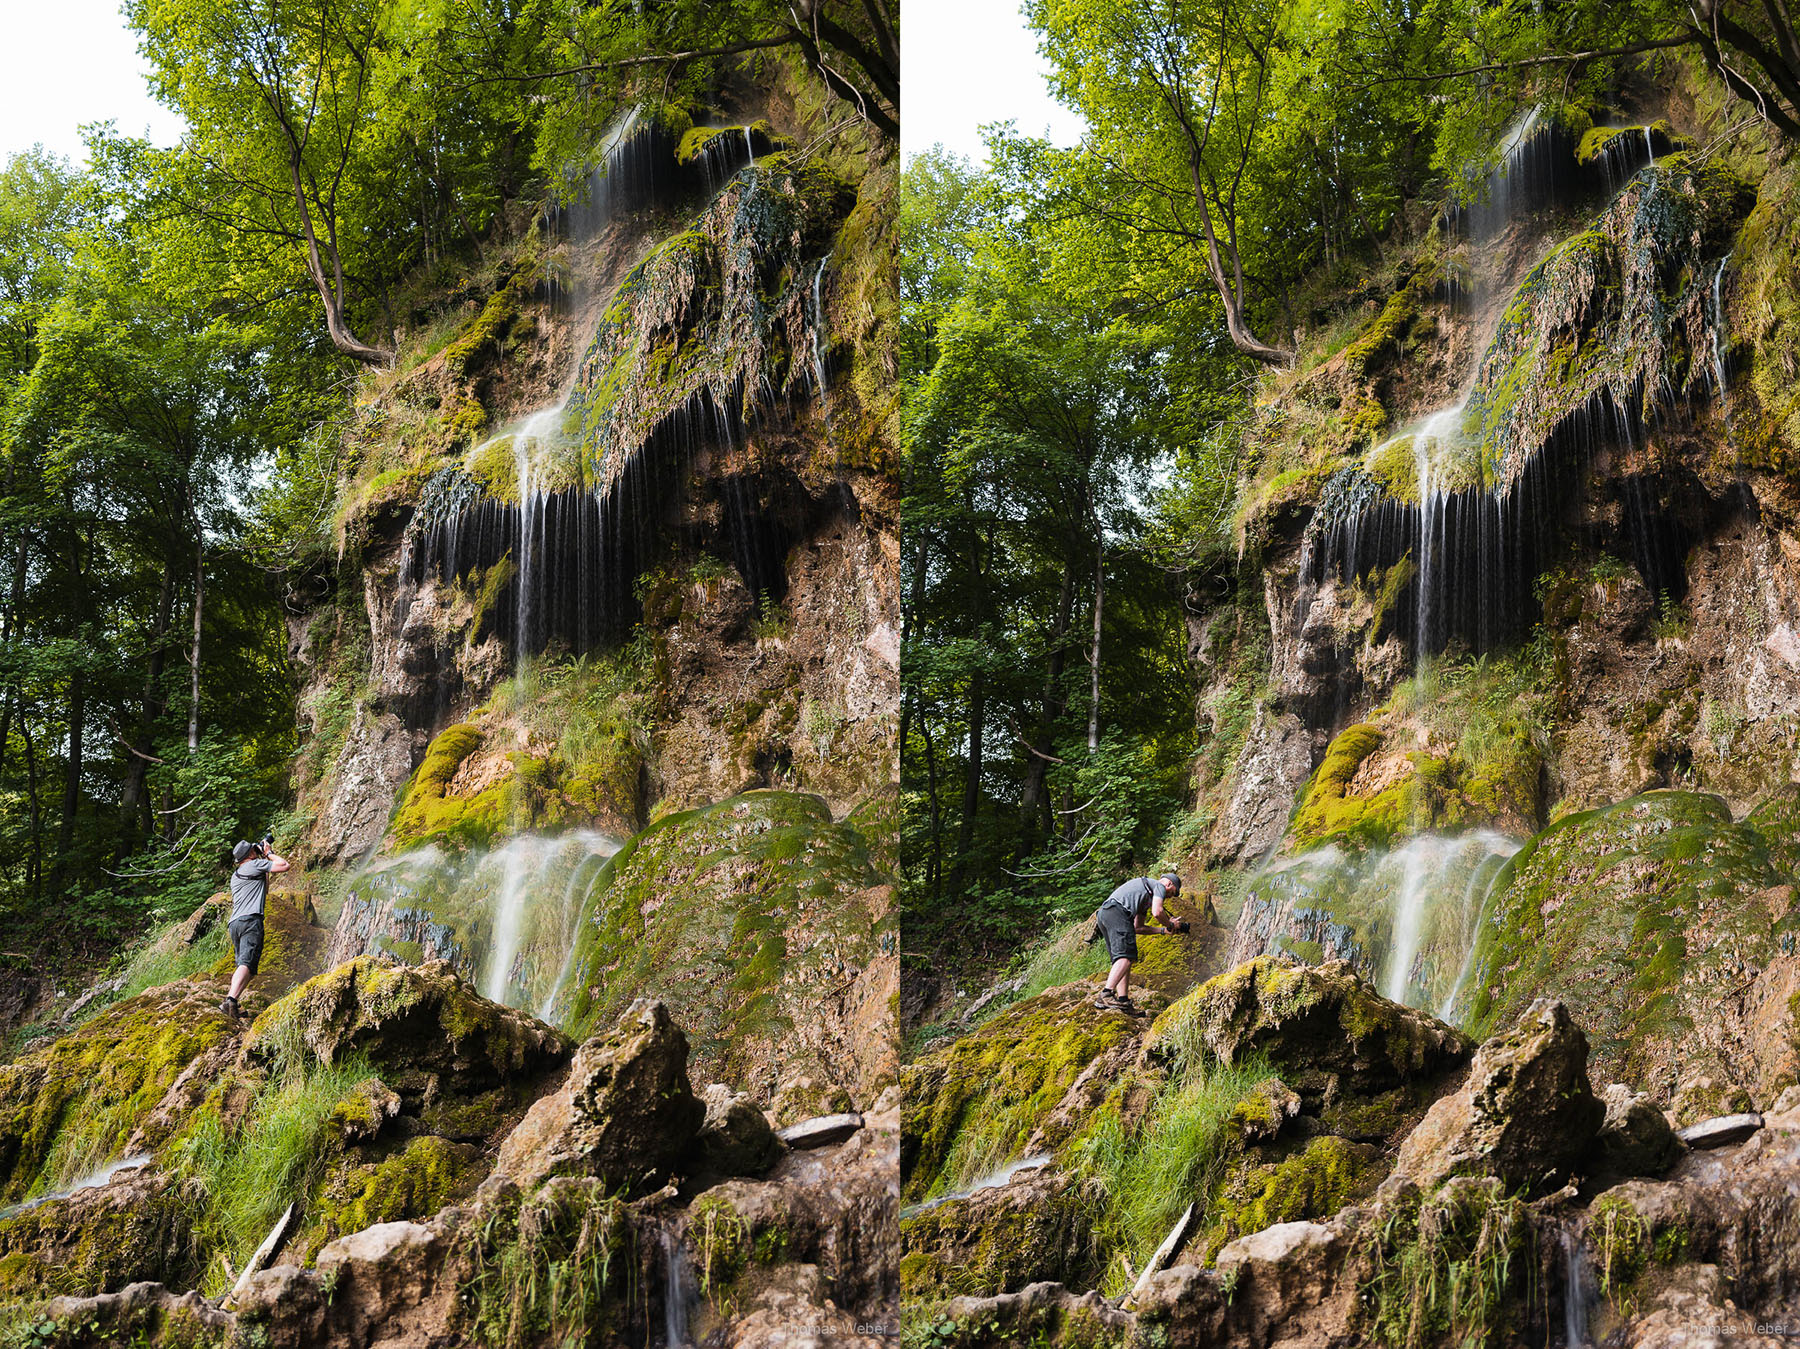 Uracher Wasserfall bei Bad Urach, Fotograf Thomas Weber aus Oldenburg